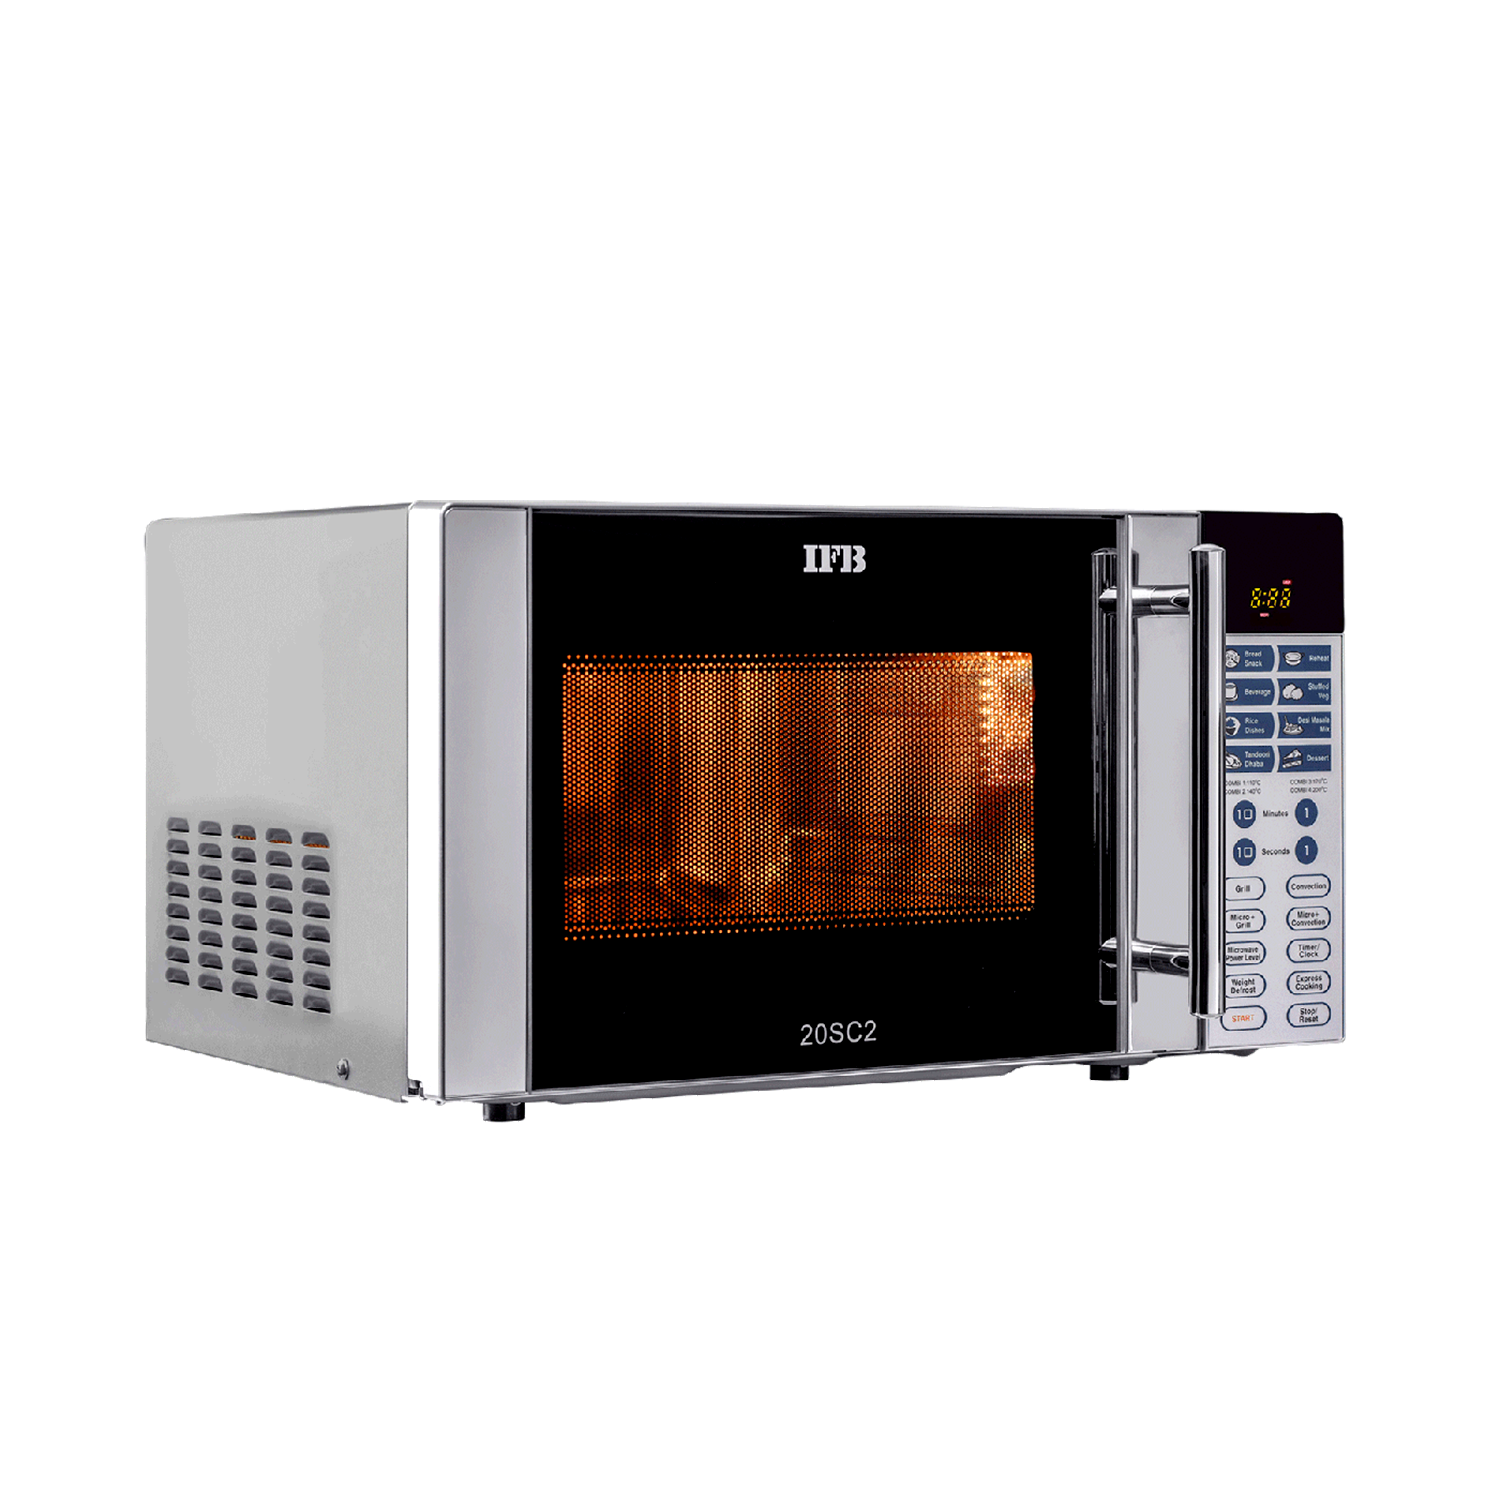 IFB 20SC2 Metal Metallic Silver 20L Microwave Oven